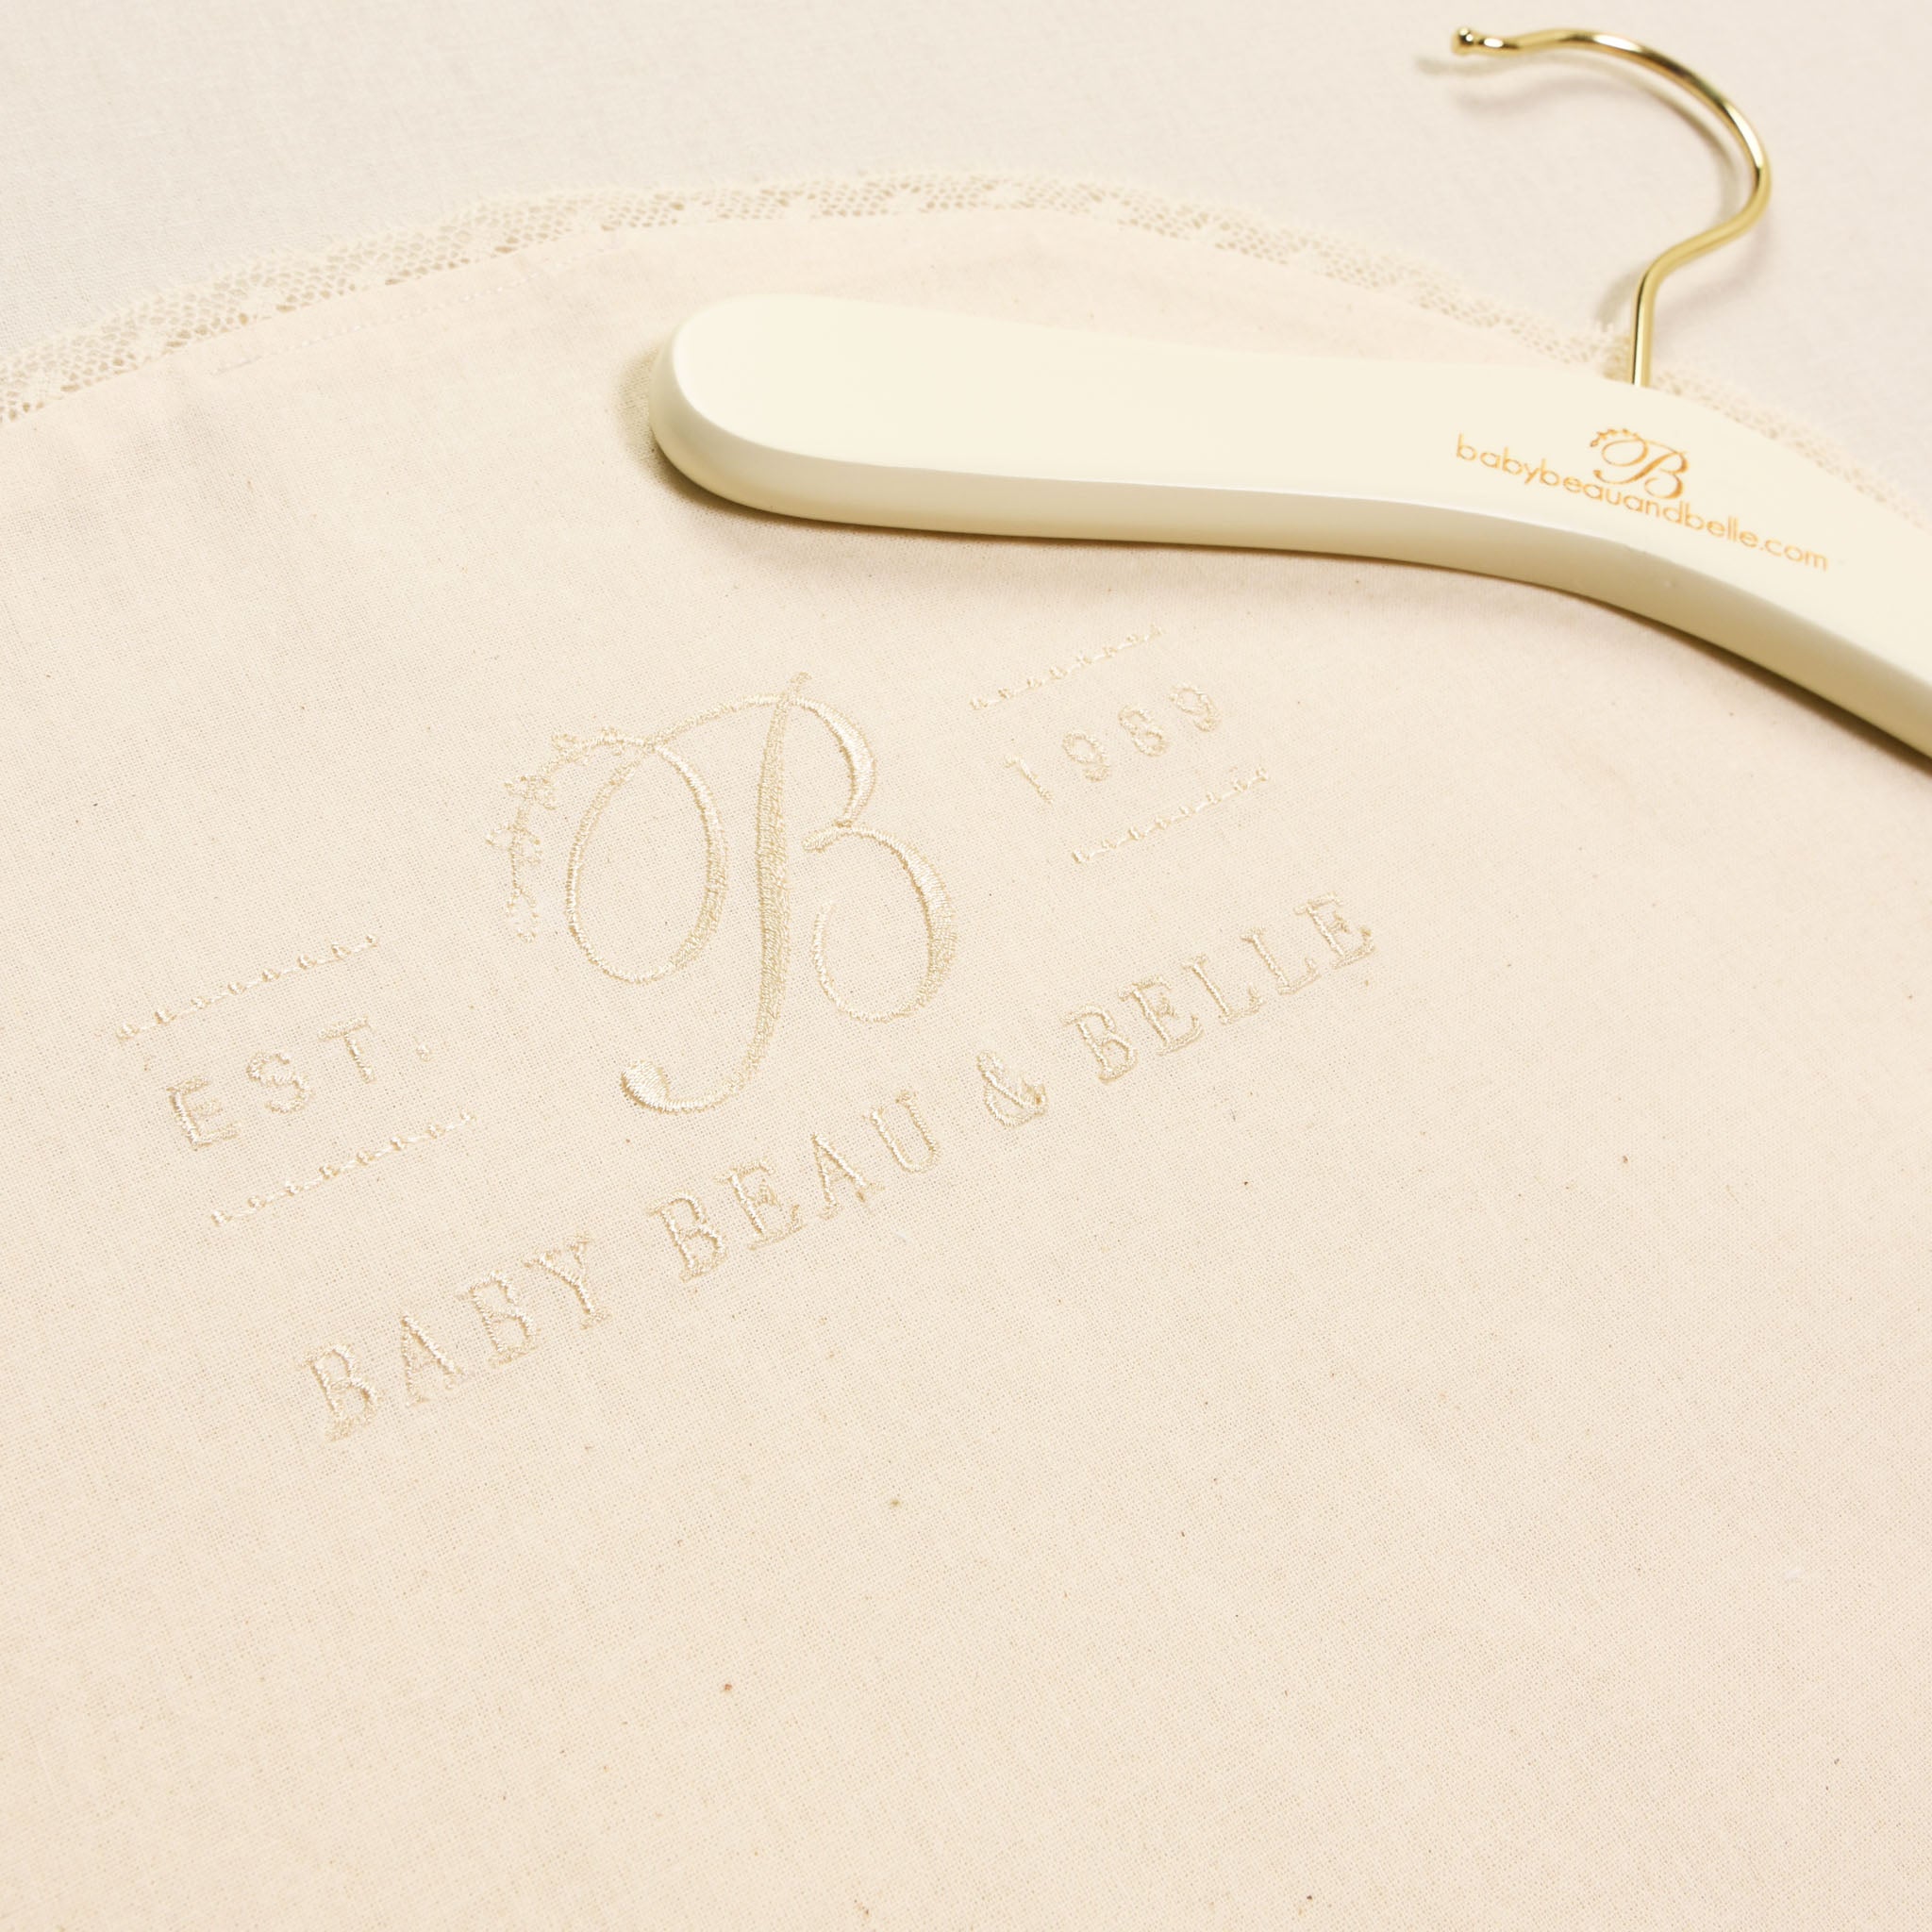 Garment Bag Hanger - 24 x 42 Inch - Clothing Storage Cover - Includes  Zipper Closure and Travel Loop - Suits, Dresses Travel Closet Organization  - White | Smart Design® Garment Bag